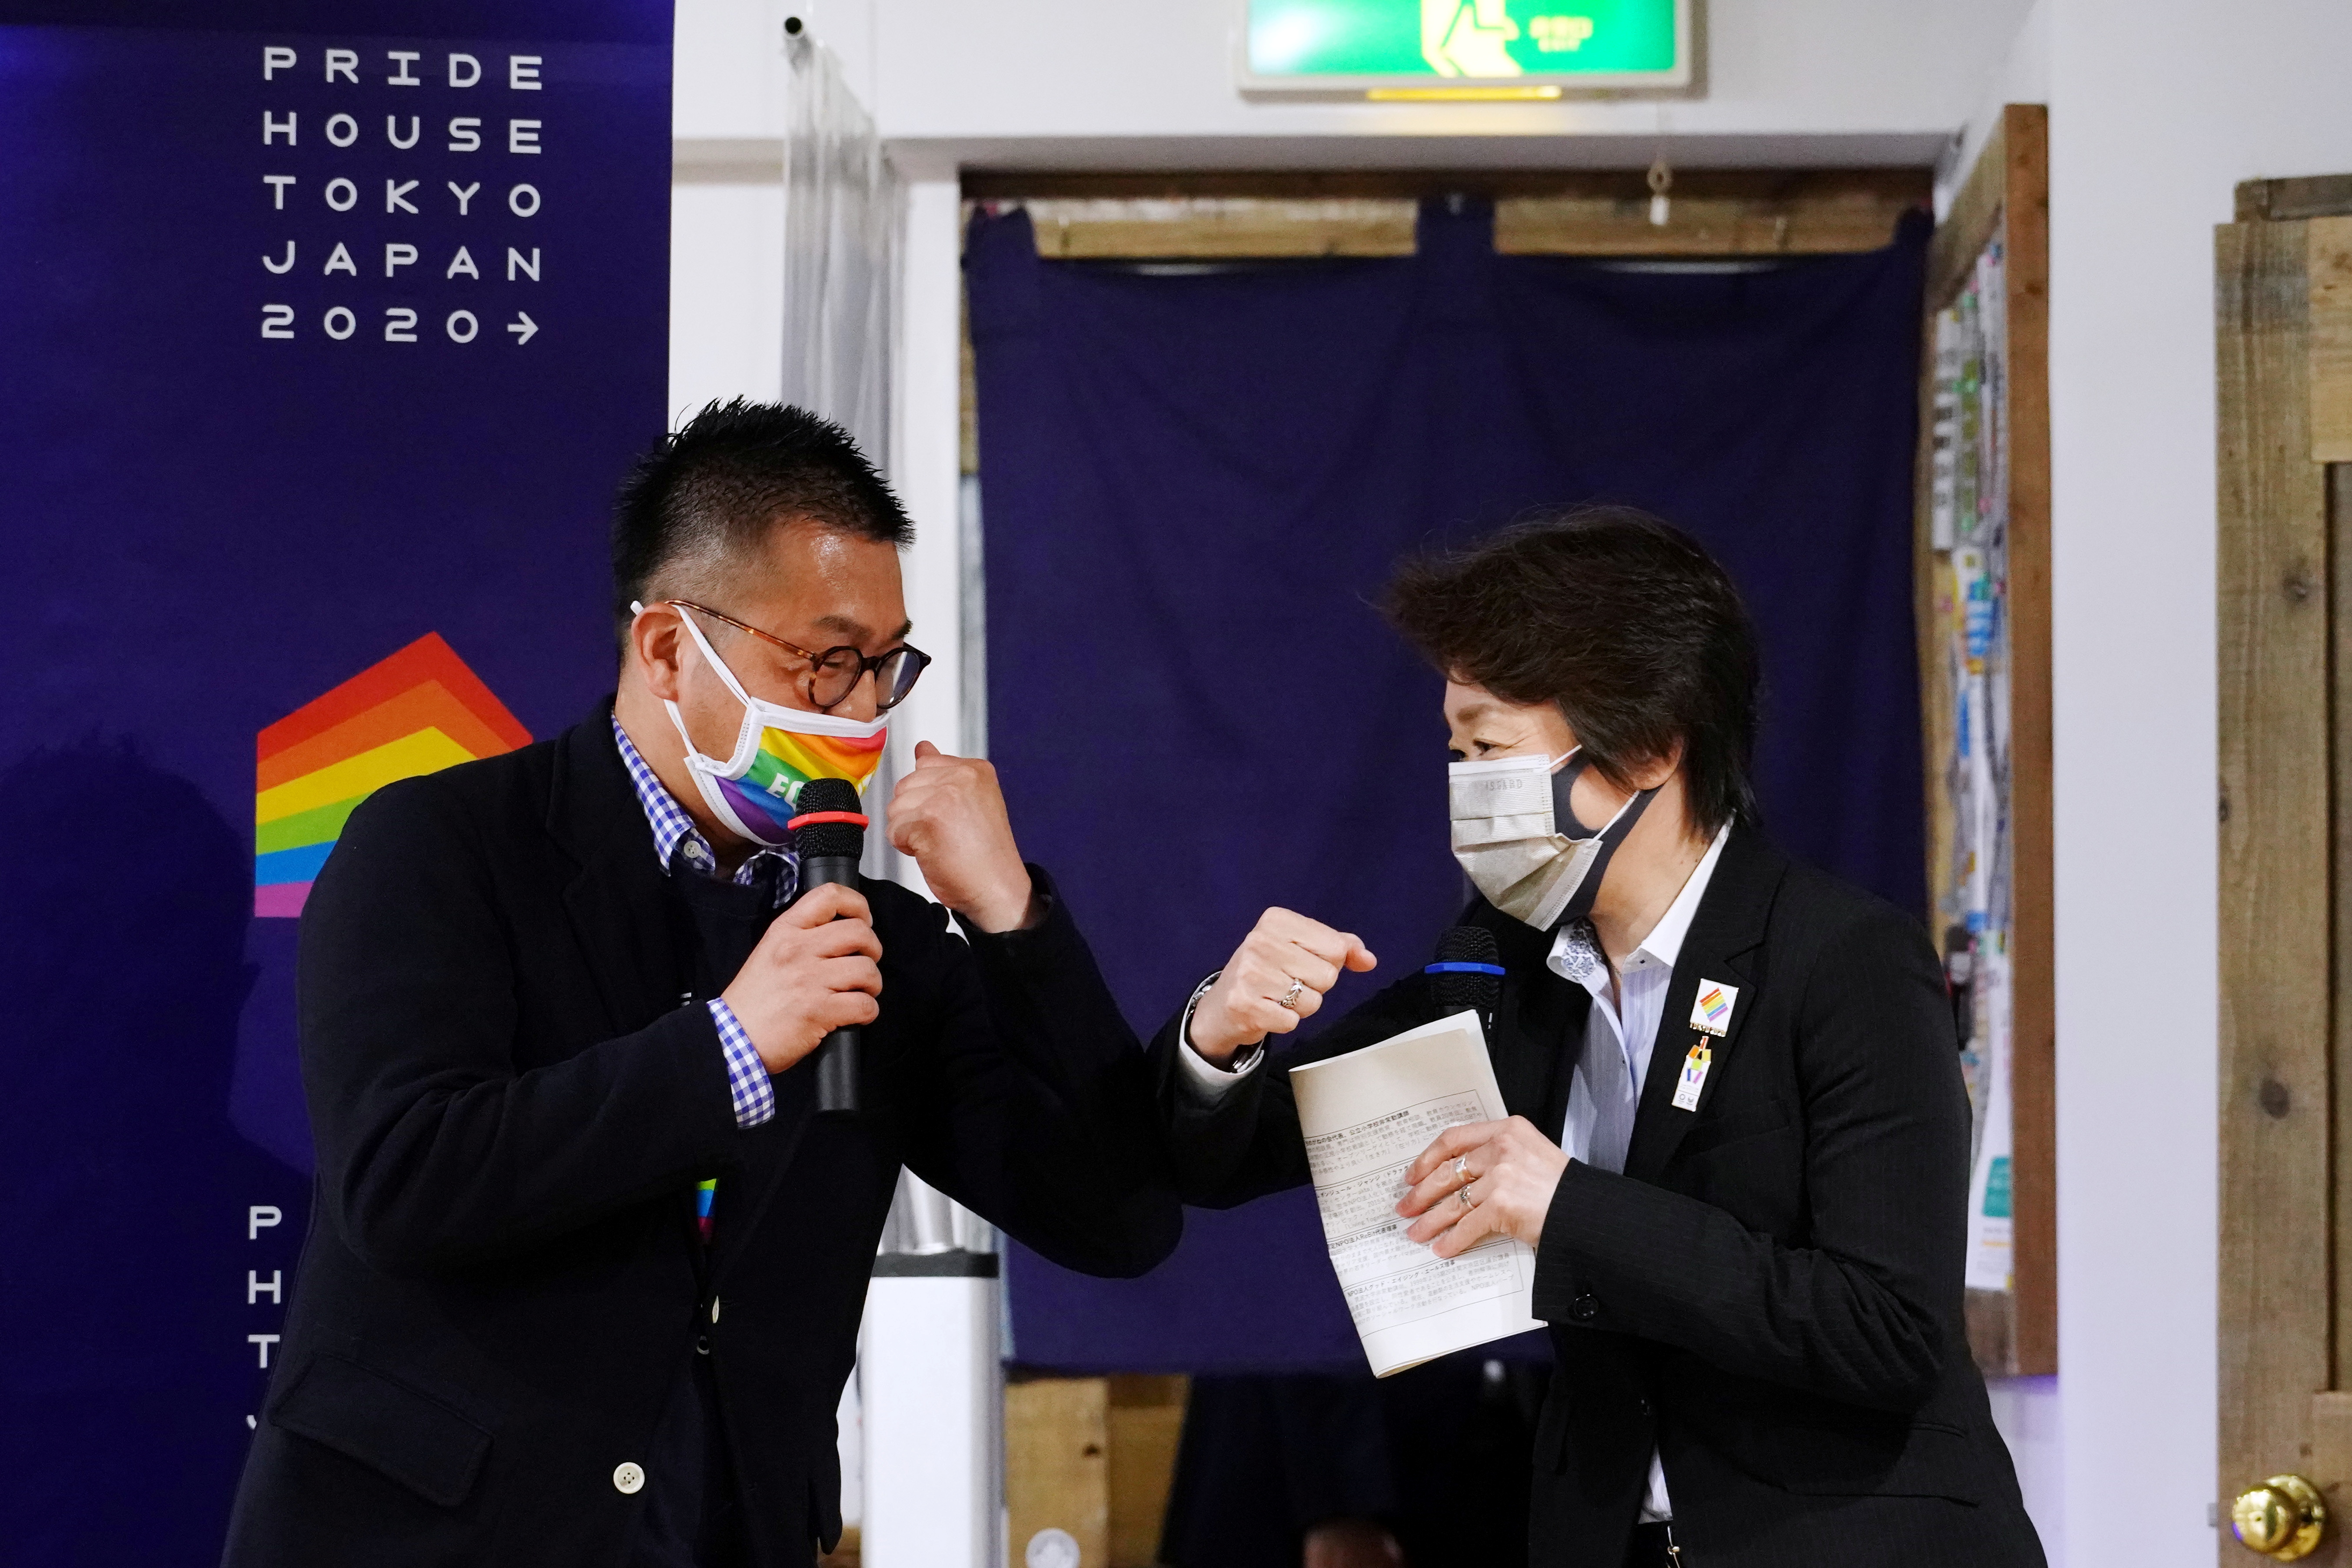 Tokyo 2020 President Seiko Hashimoto visits Pride House Tokyo Legacy